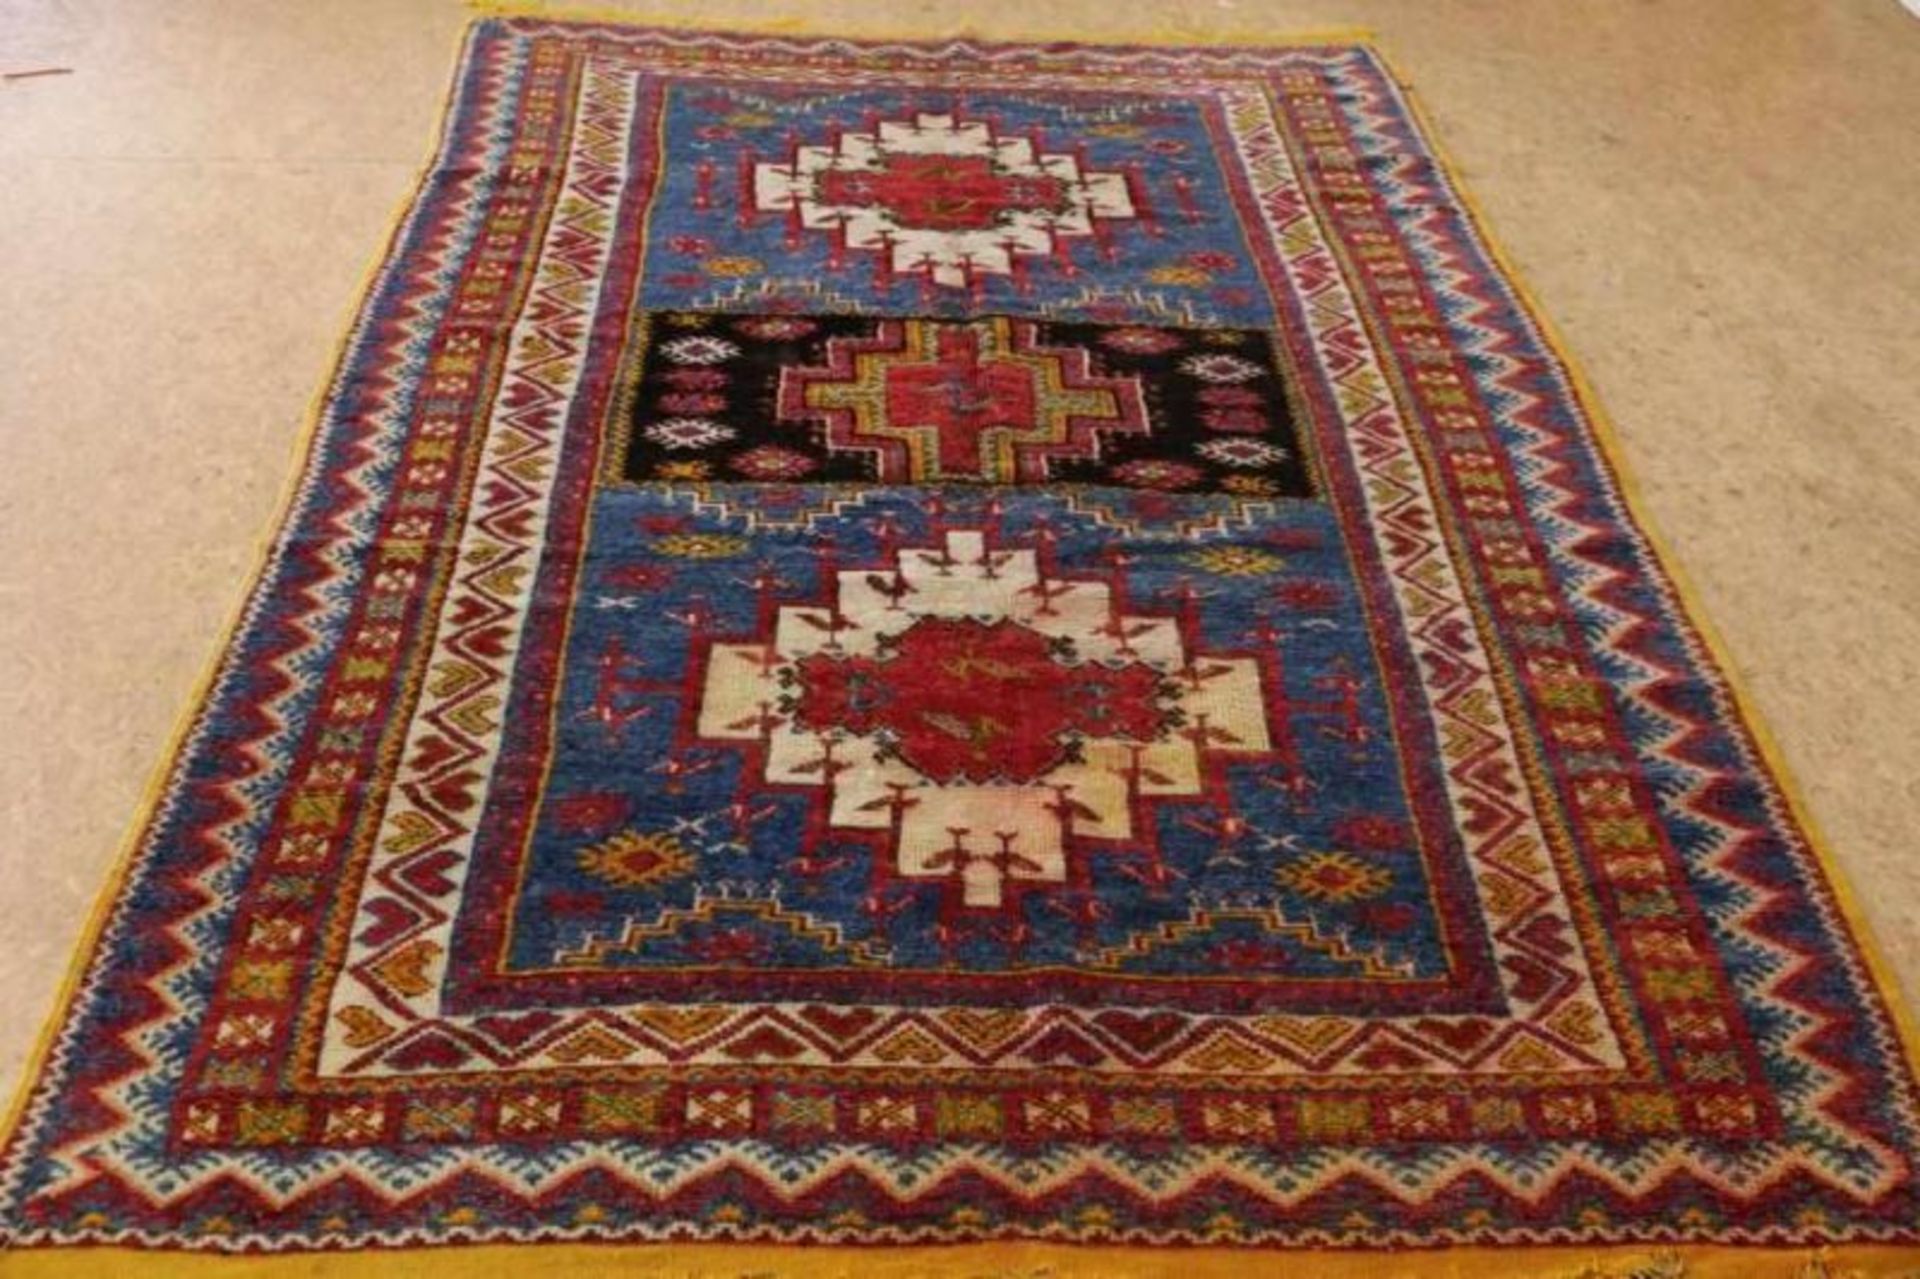 Tapijt, Kazak 252 x 155 cm. Kazak carpet, 252 x 155 cm.